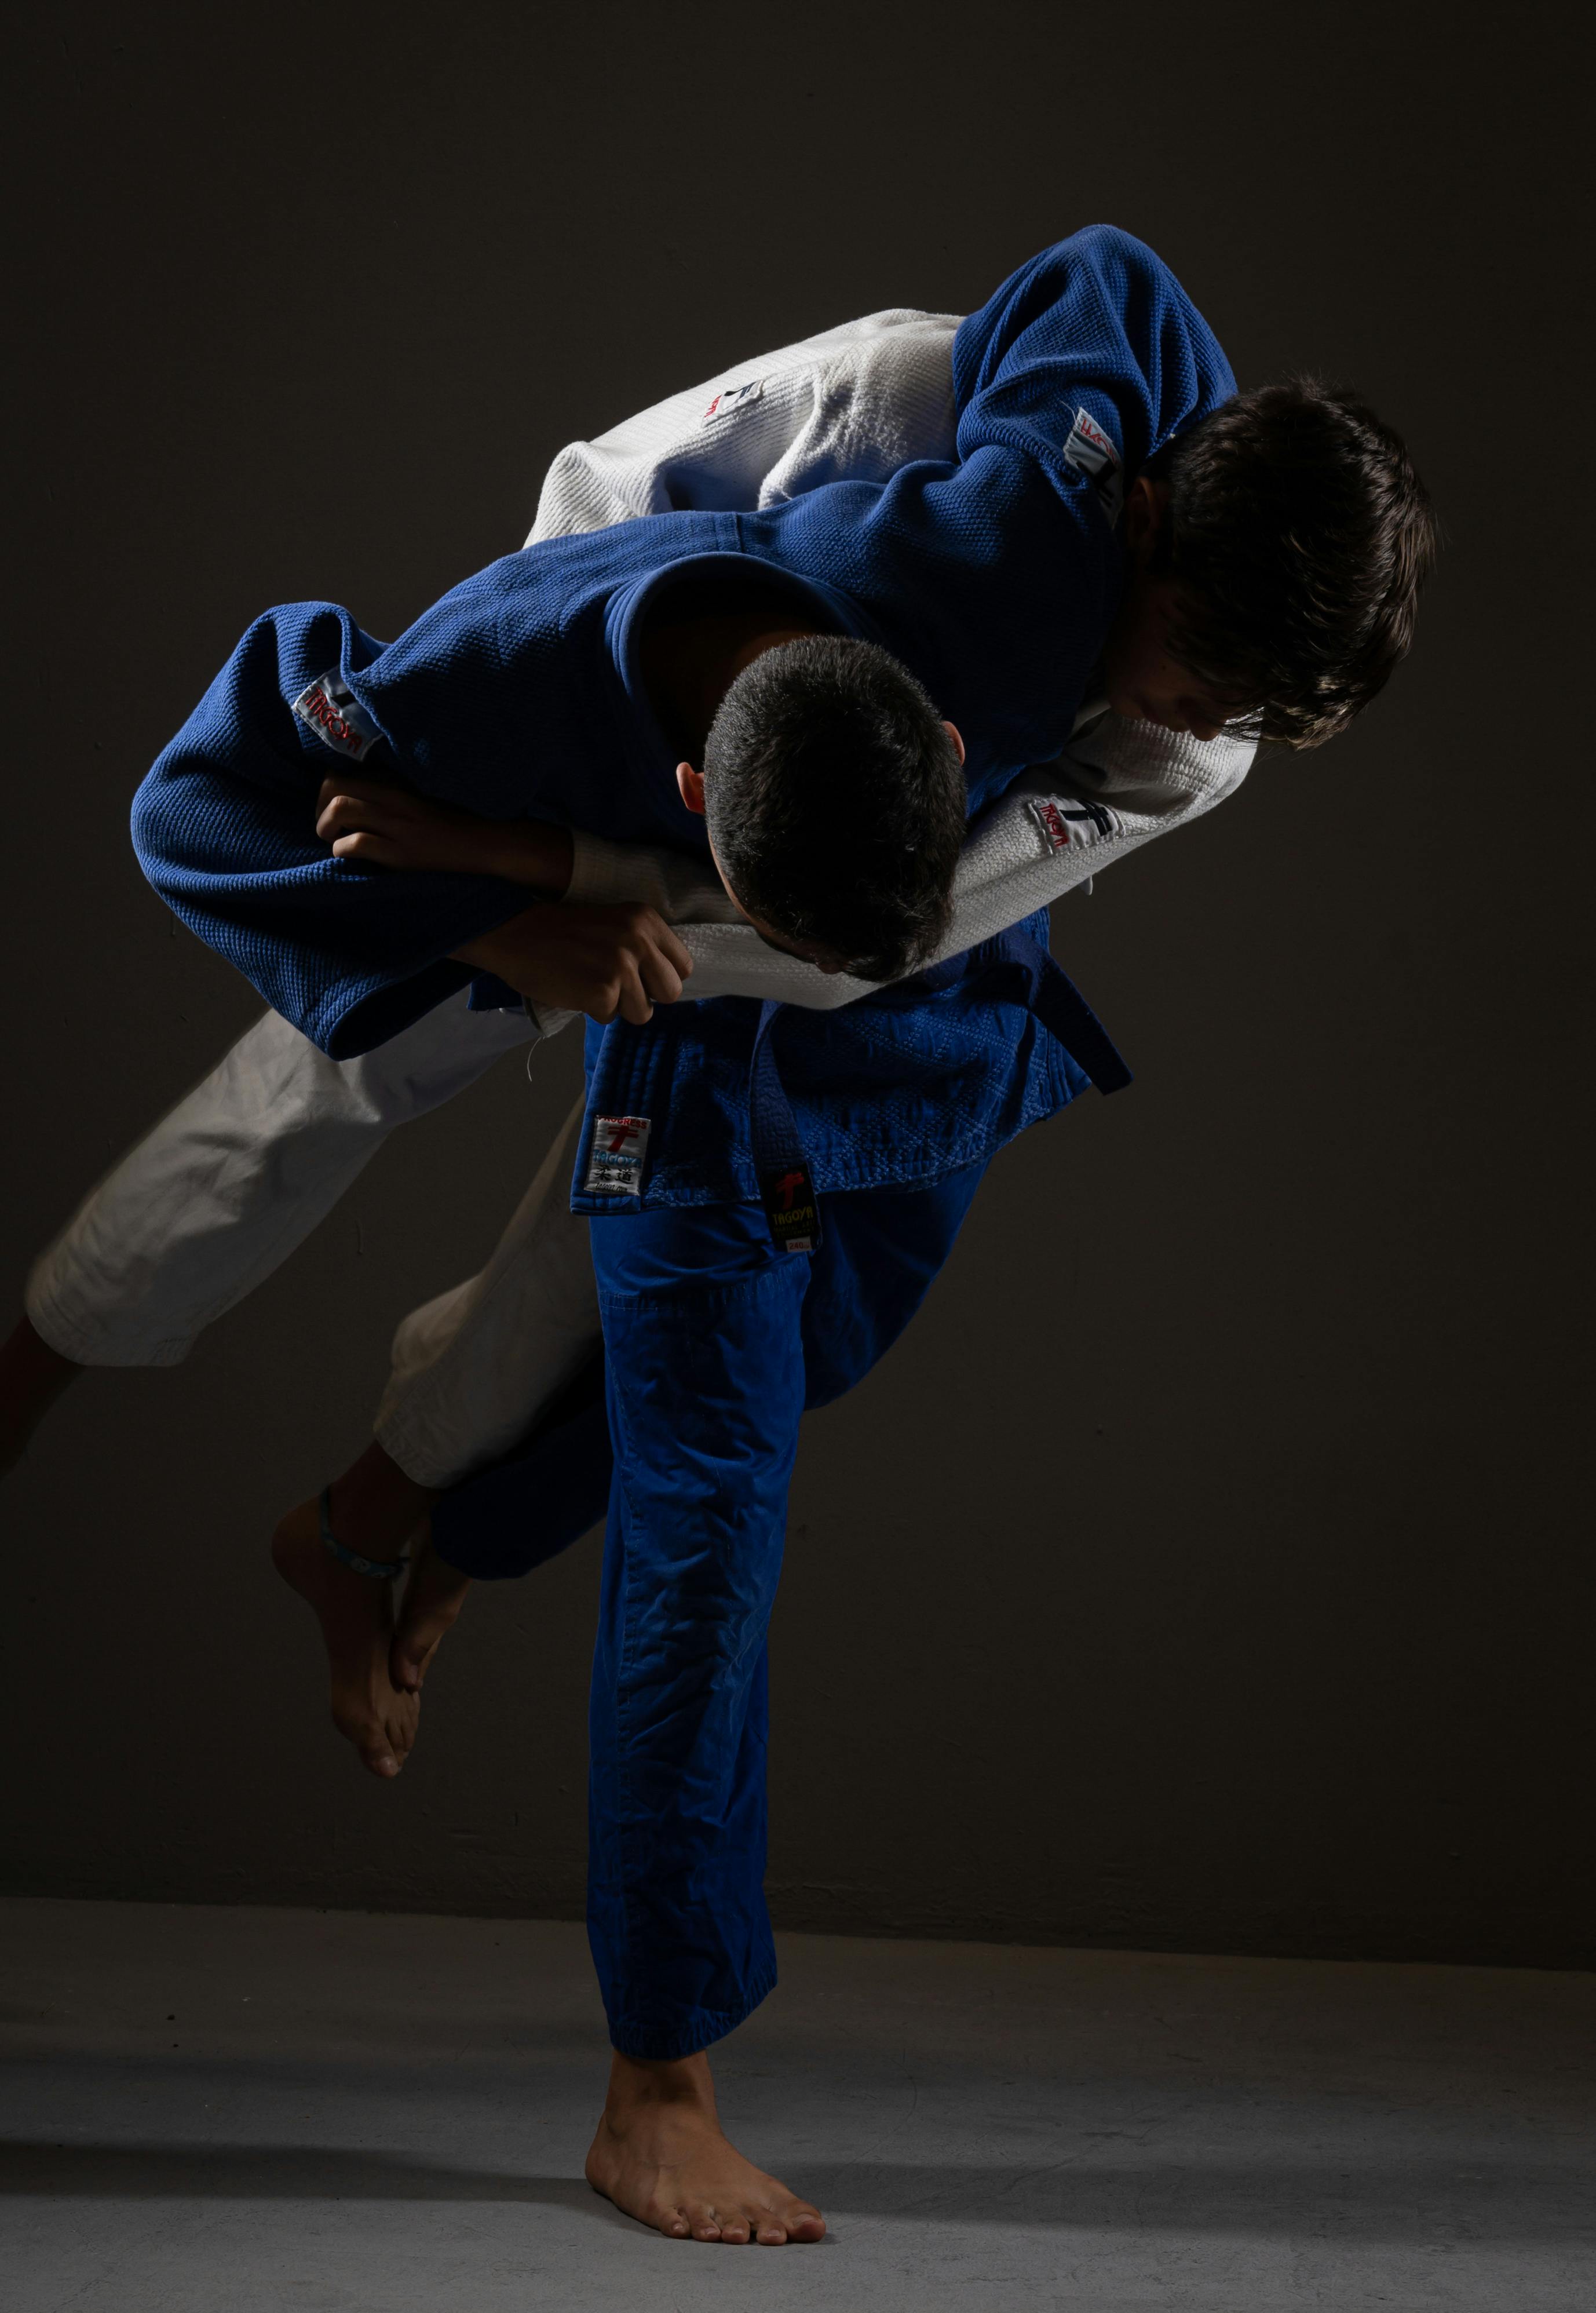 100+] Judo Background s | Wallpapers.com